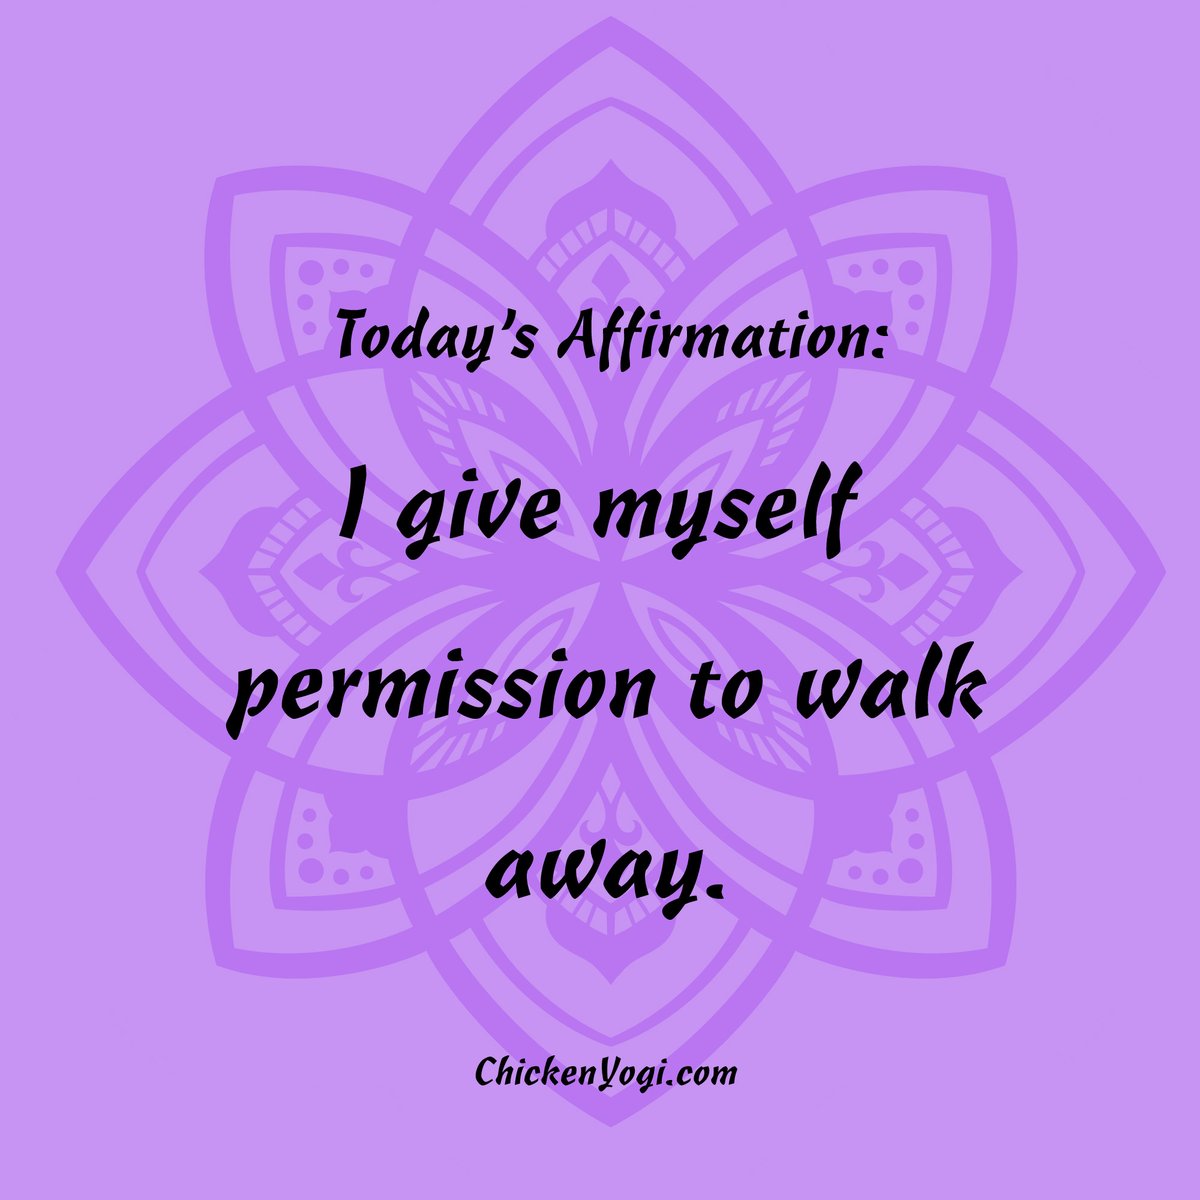 Today's affirmation: I give myself permission to walk away.

#affirmation #WordsOfWisdom #seekjoy #happiness